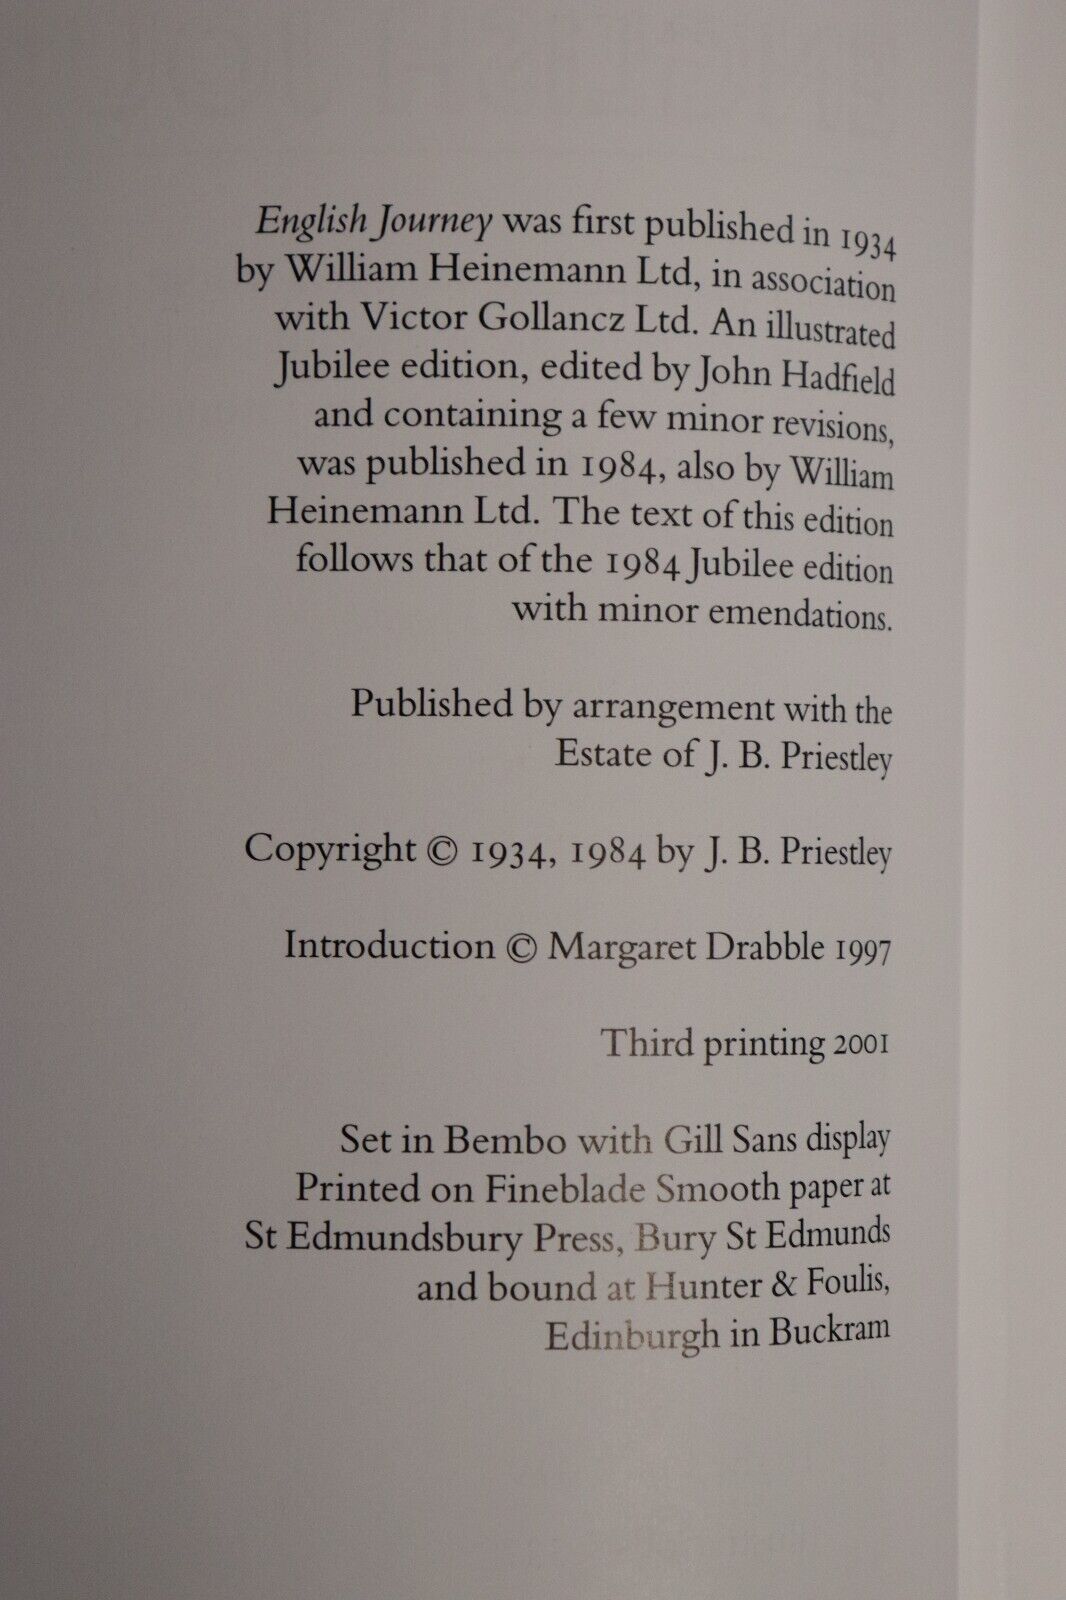 English Journey by JB Priestley - 2001 - Folio Society - British History Book